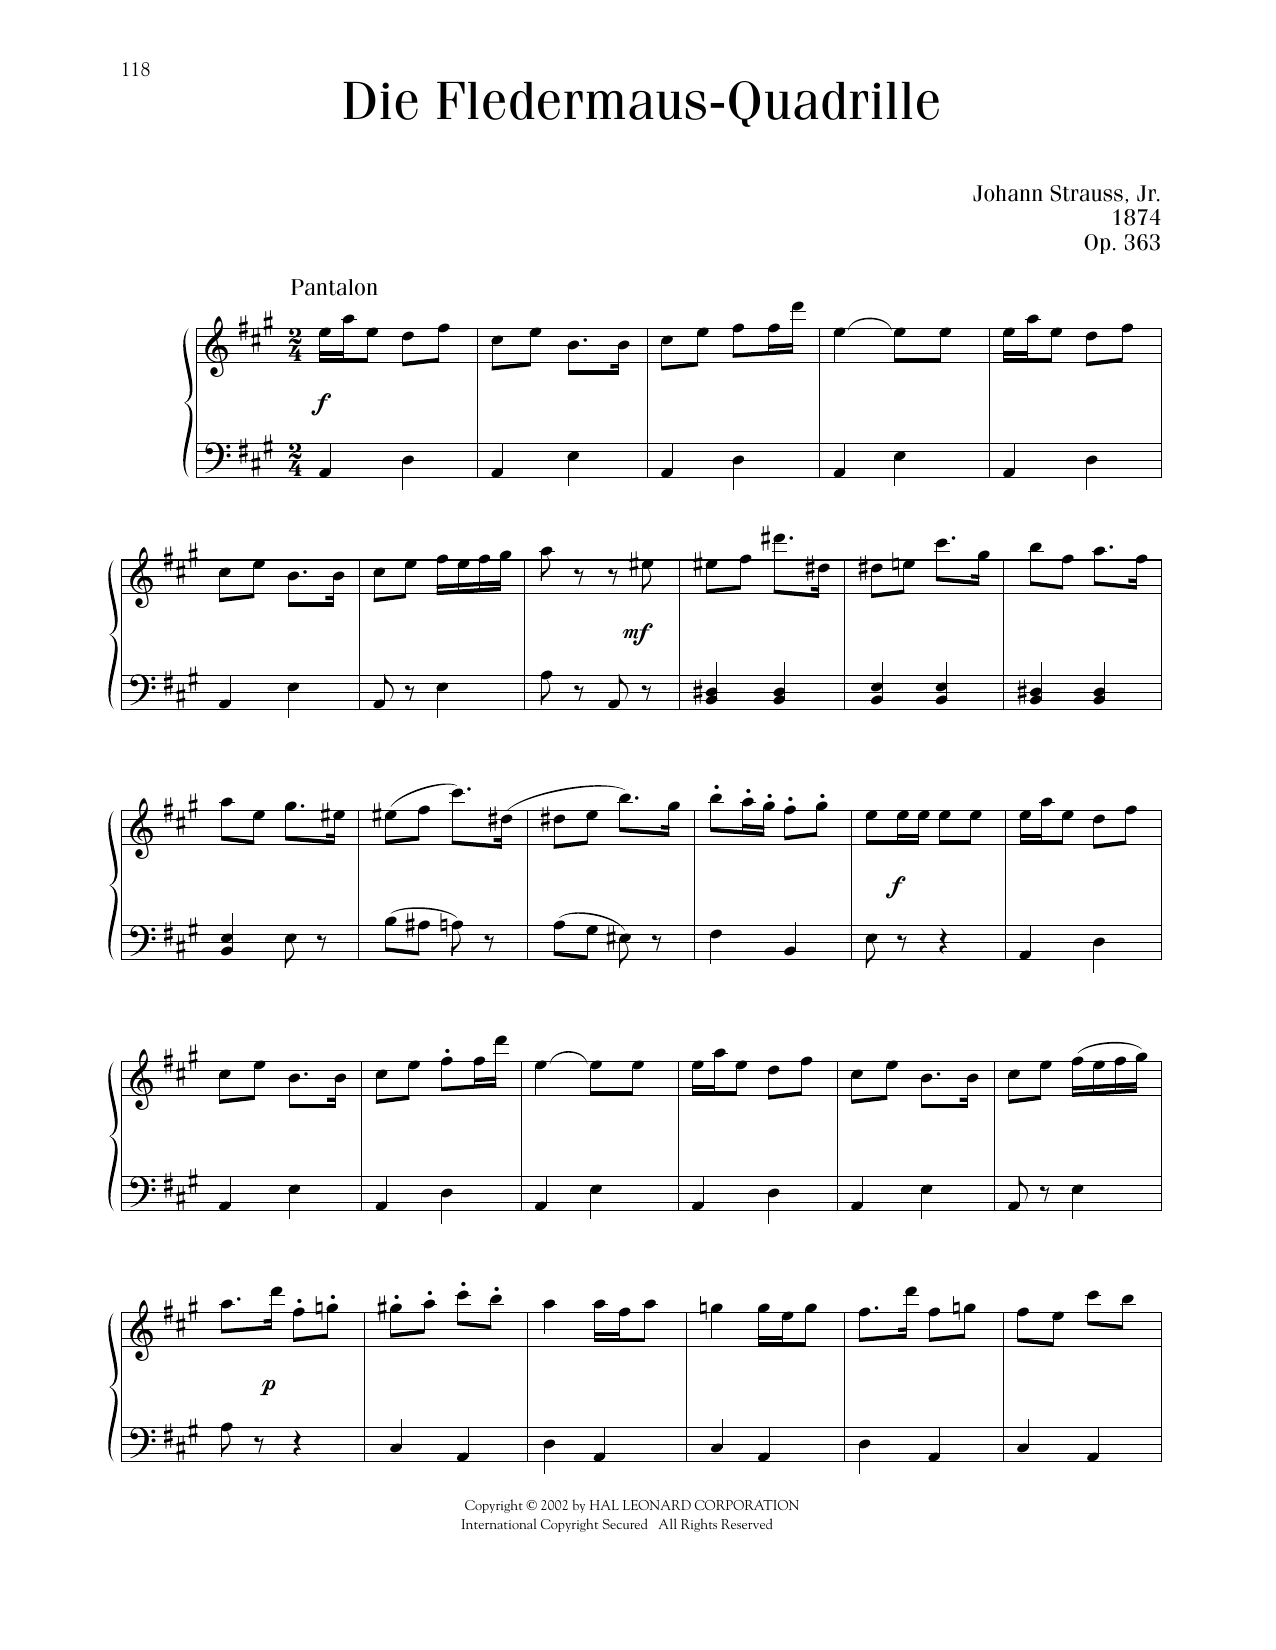 Johann Strauss Fledermaus-Quadrille, Op. 363 sheet music notes printable PDF score